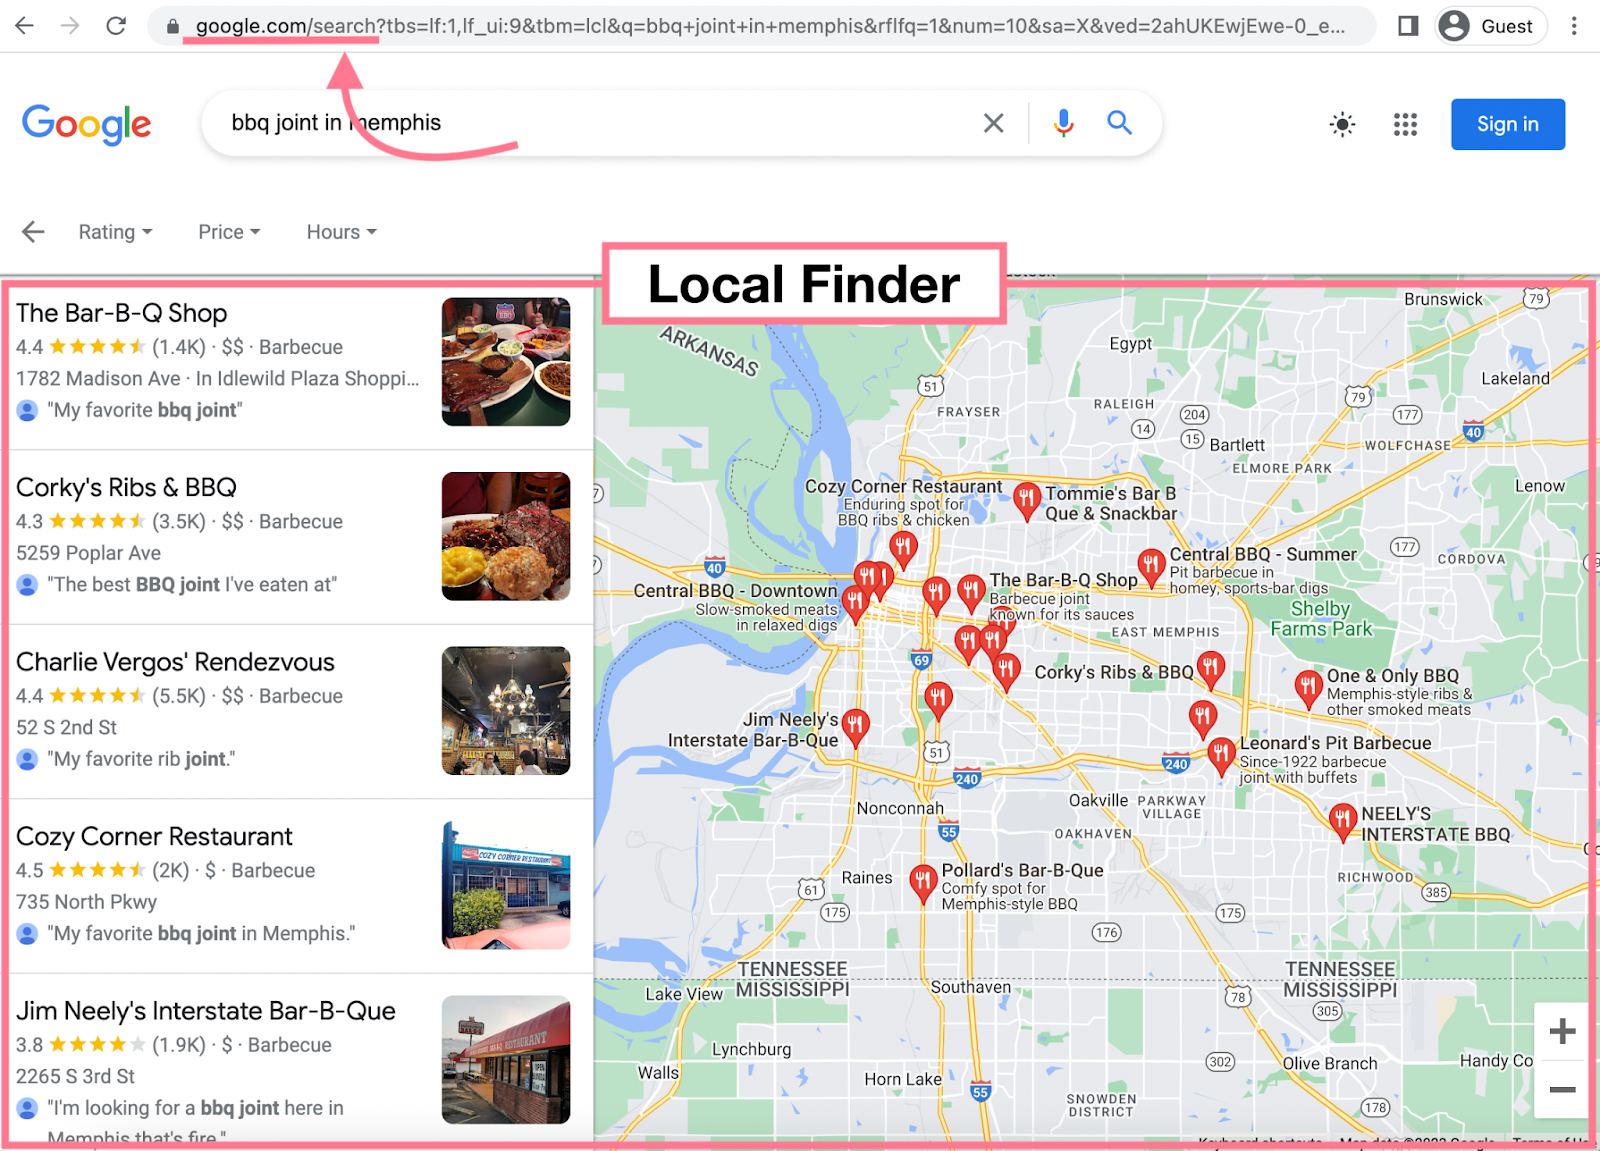 Market Place on Google Maps Platform